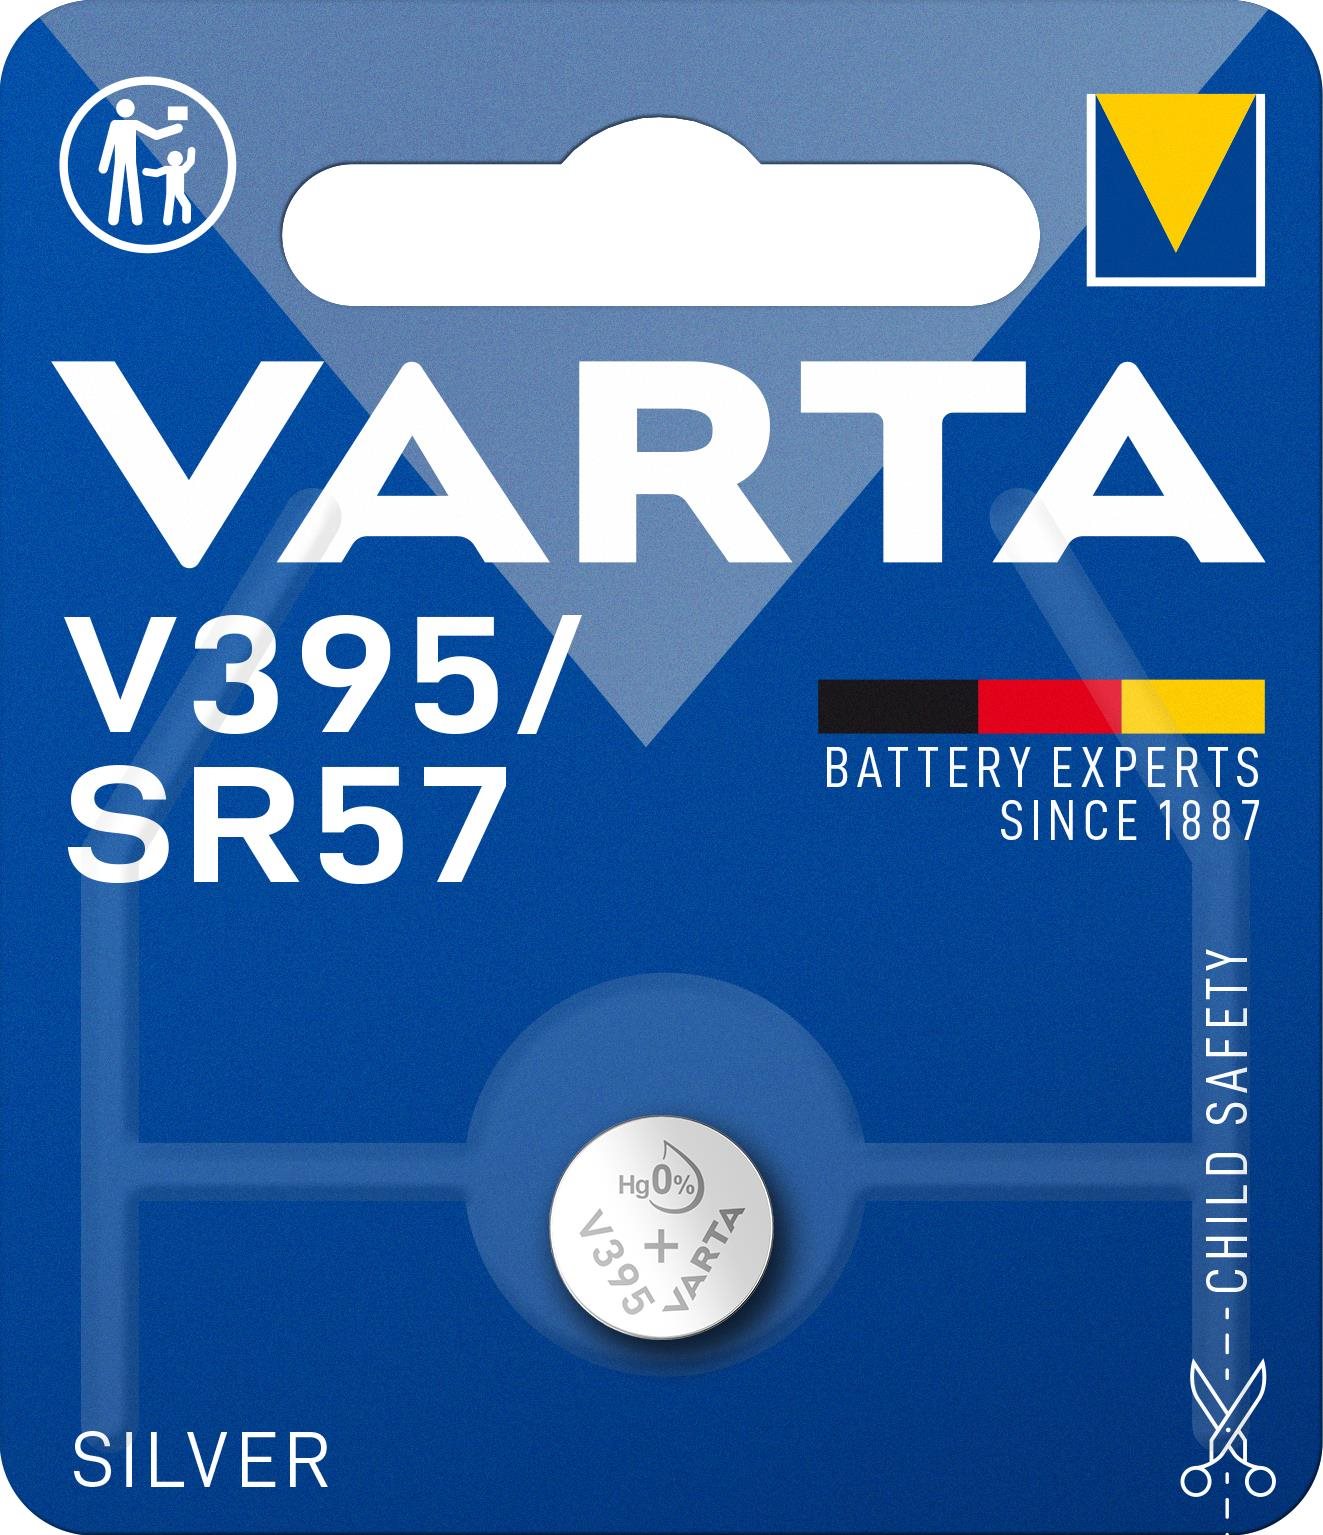 VARTA Speciális ezüst-oxid elem V395/SR57 1 db